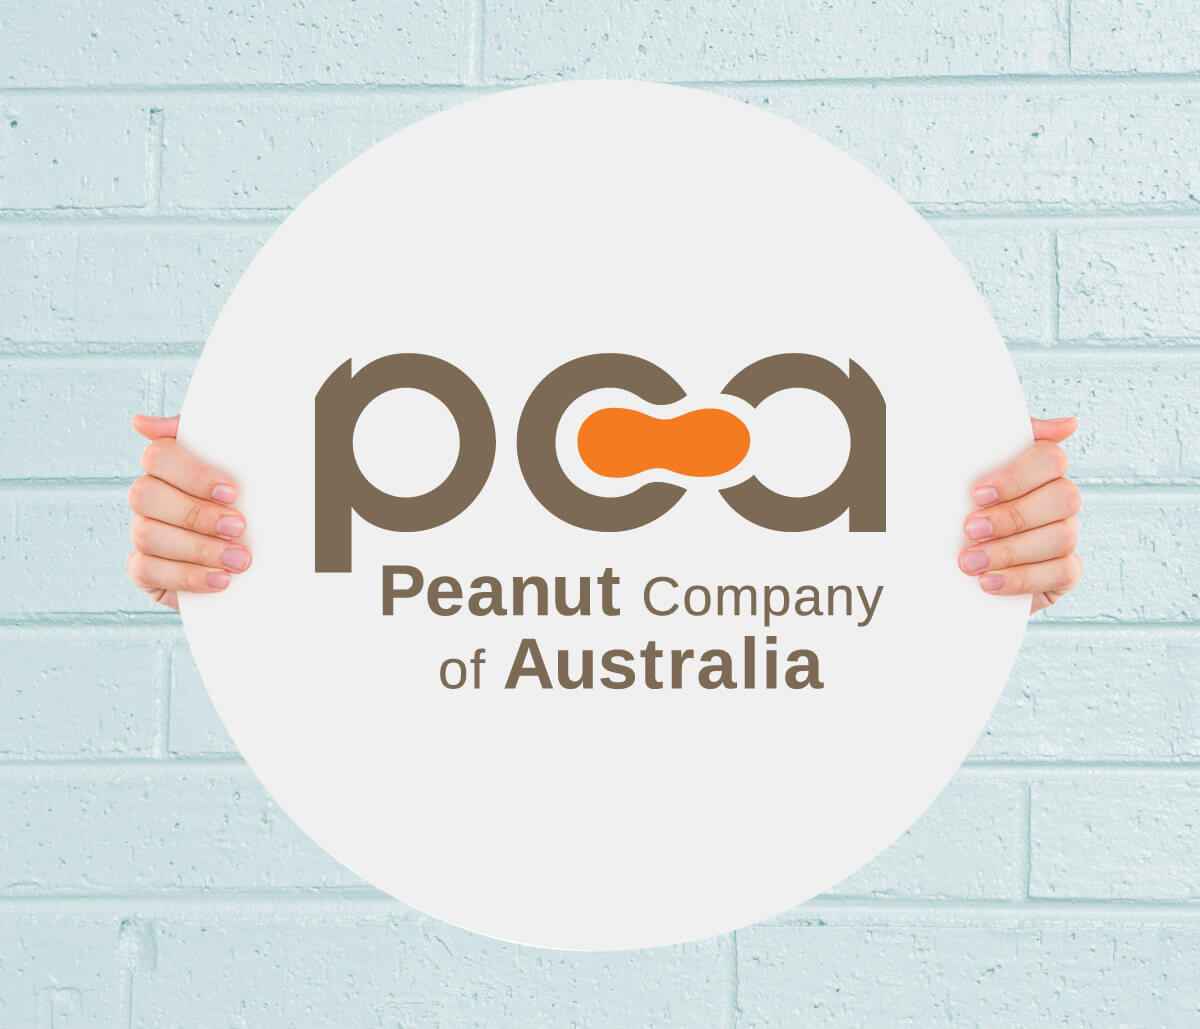 Peanut Company of Australia